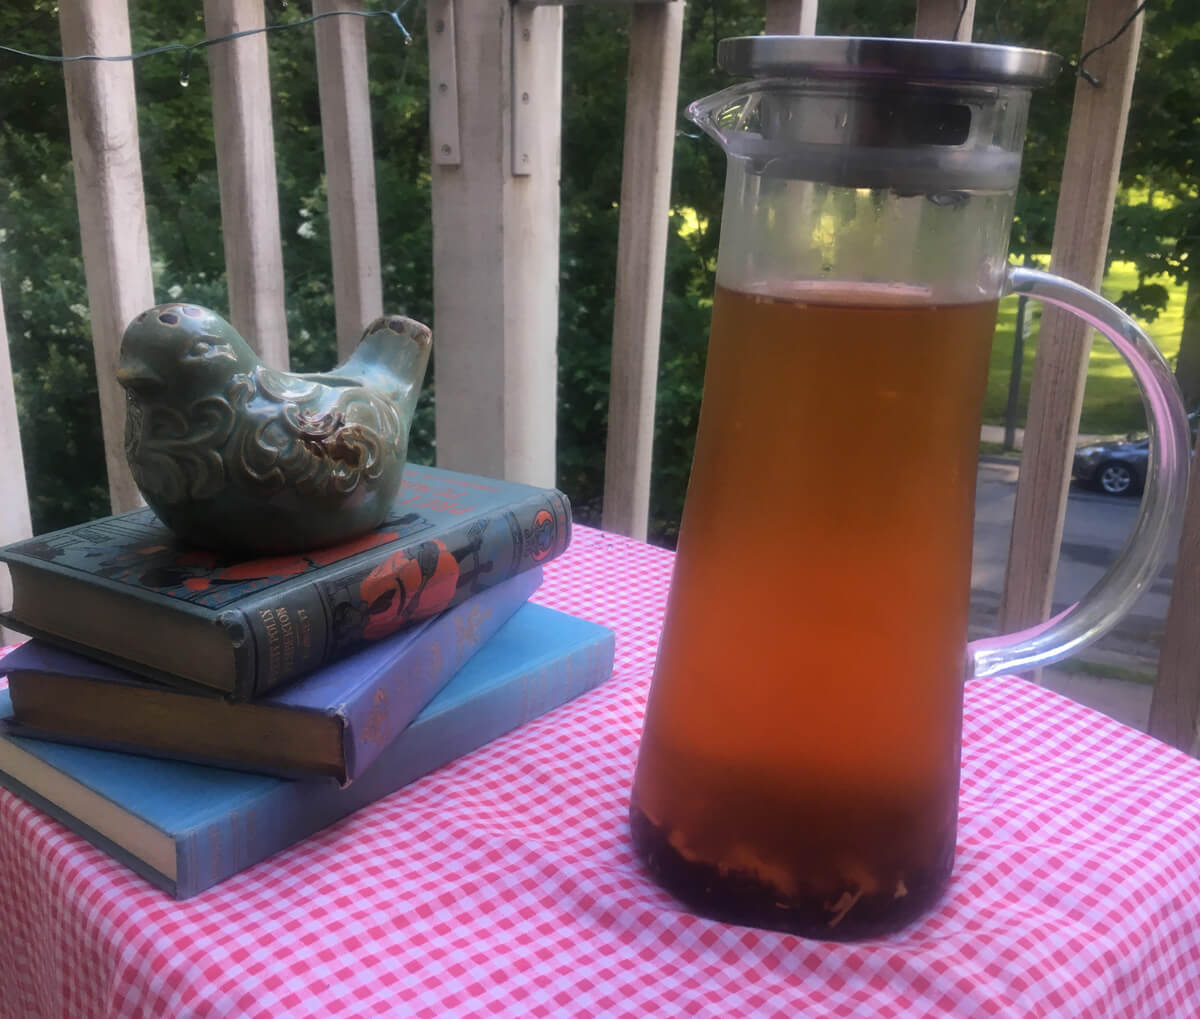 How to Brew Loose Leaf Tea - Make & Steep Great Tea – Plum Deluxe Tea